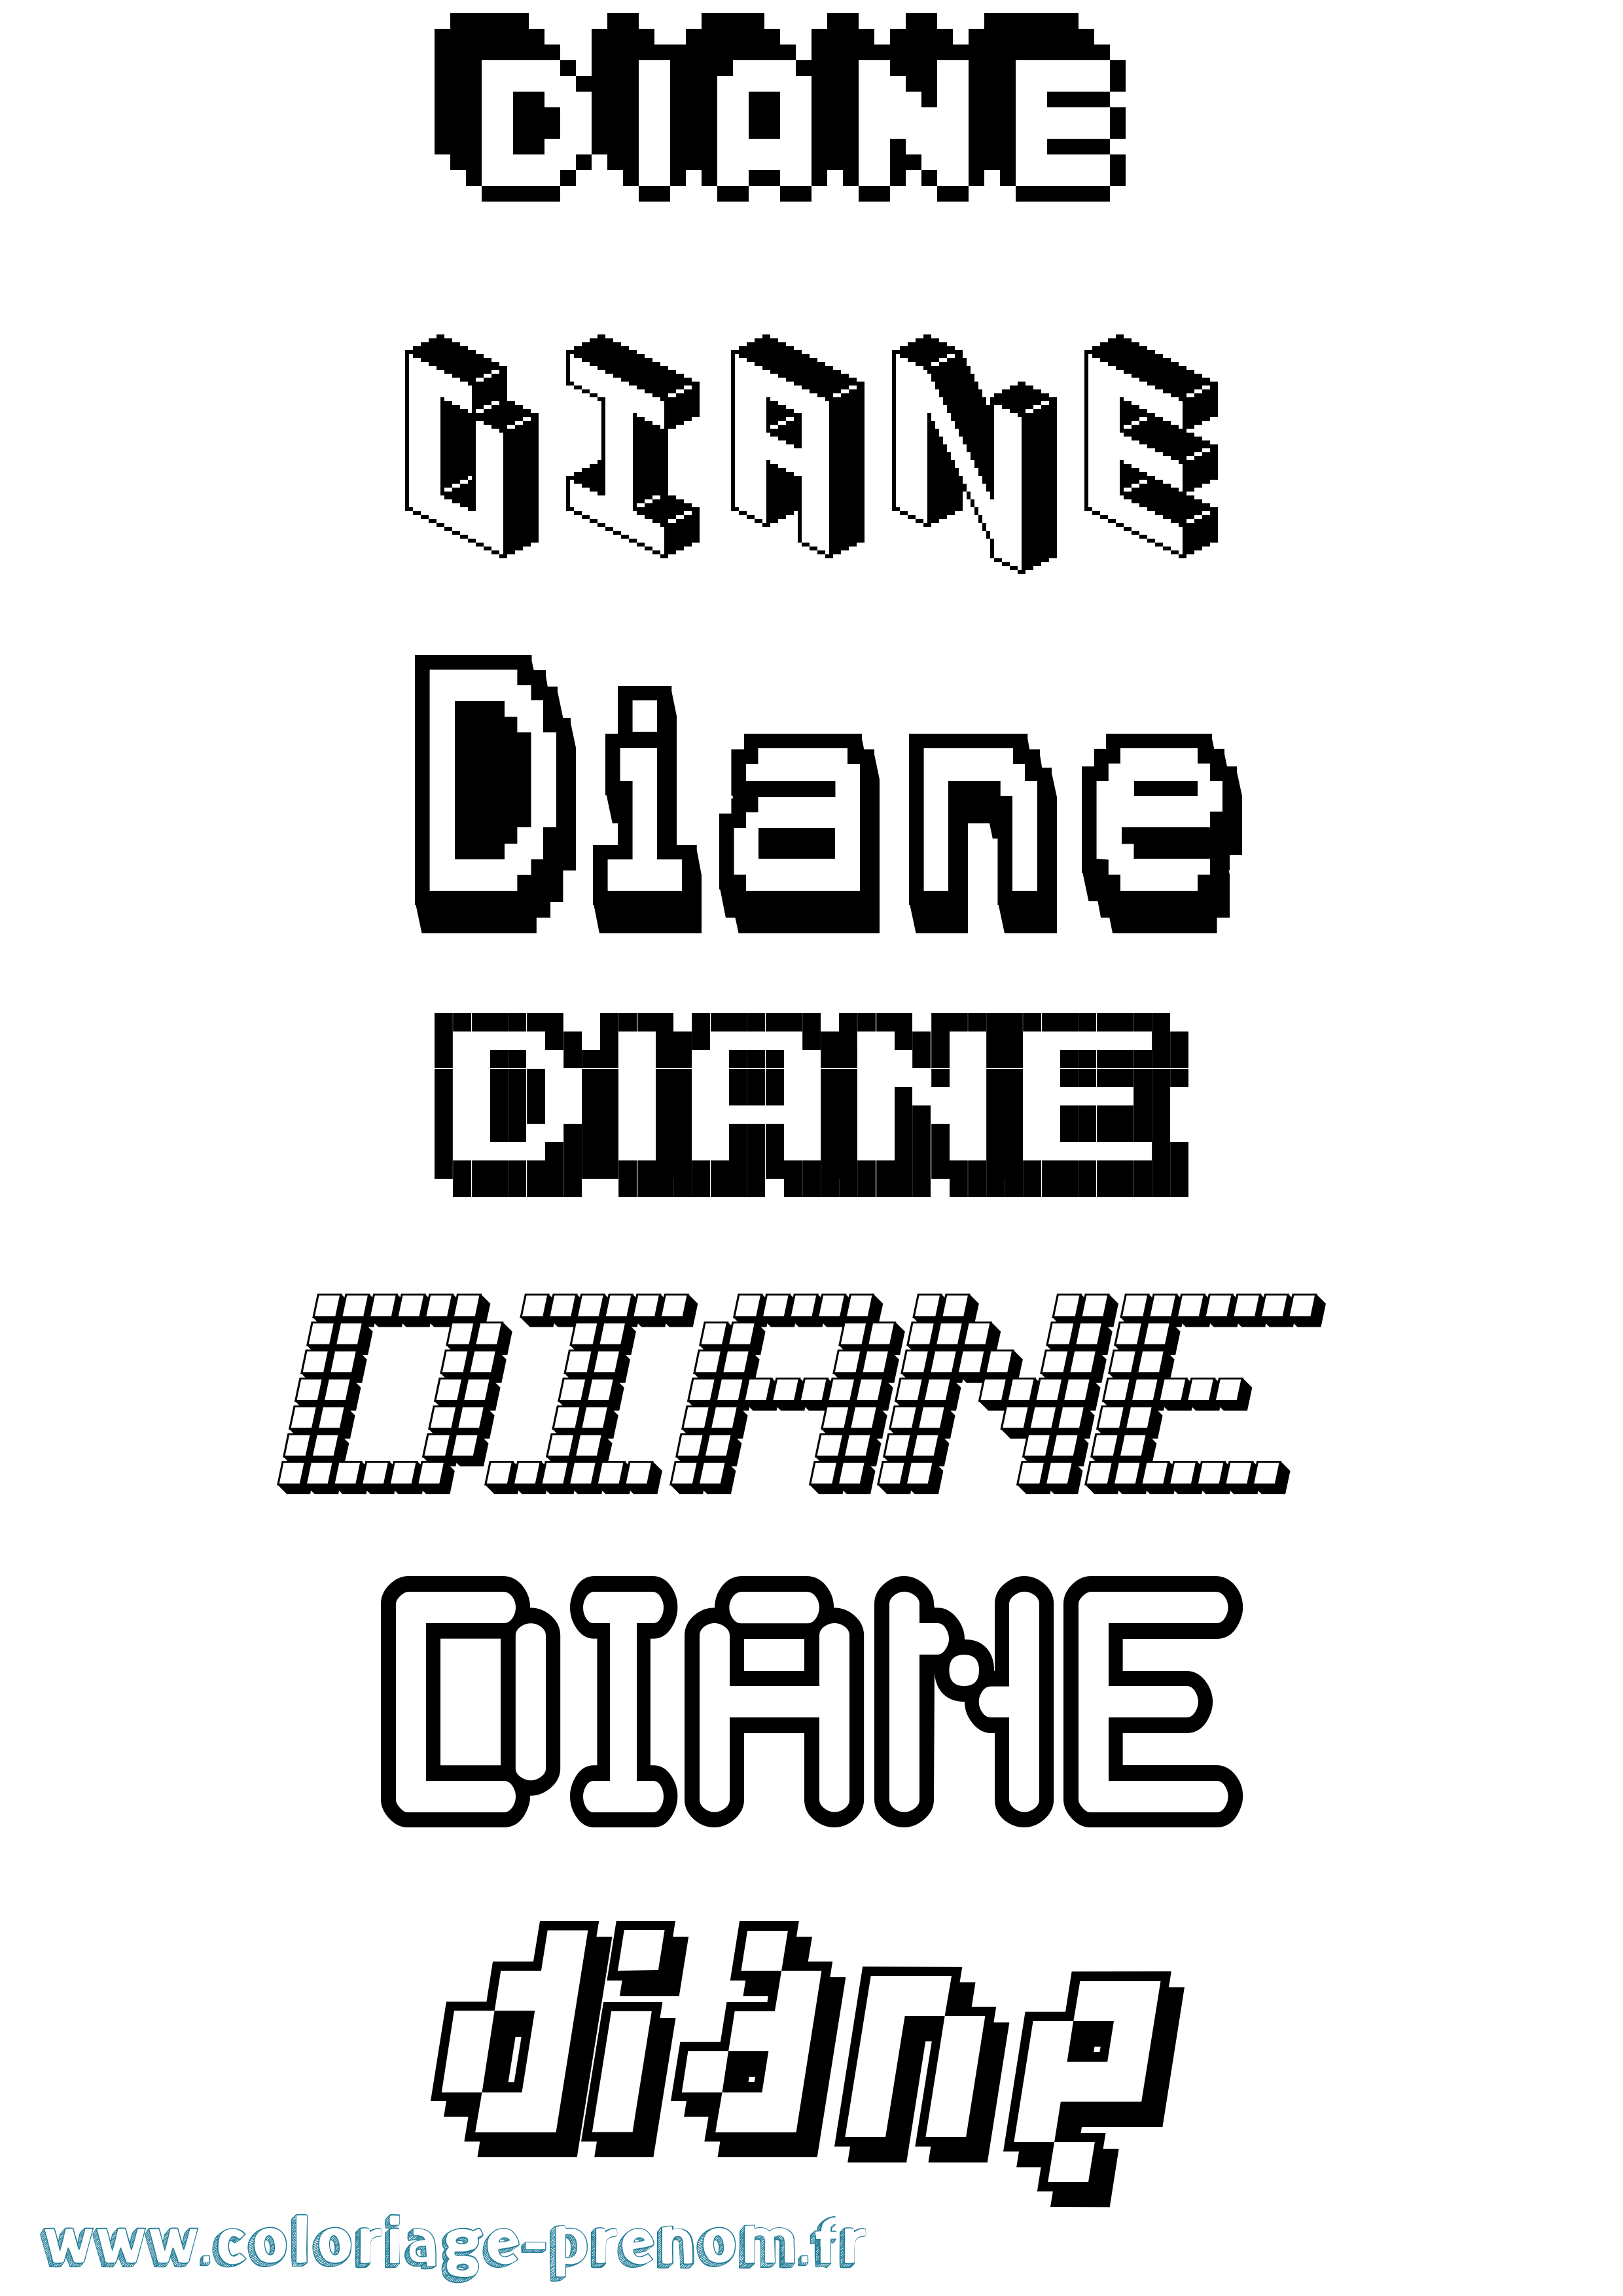 Coloriage prénom Diane Pixel